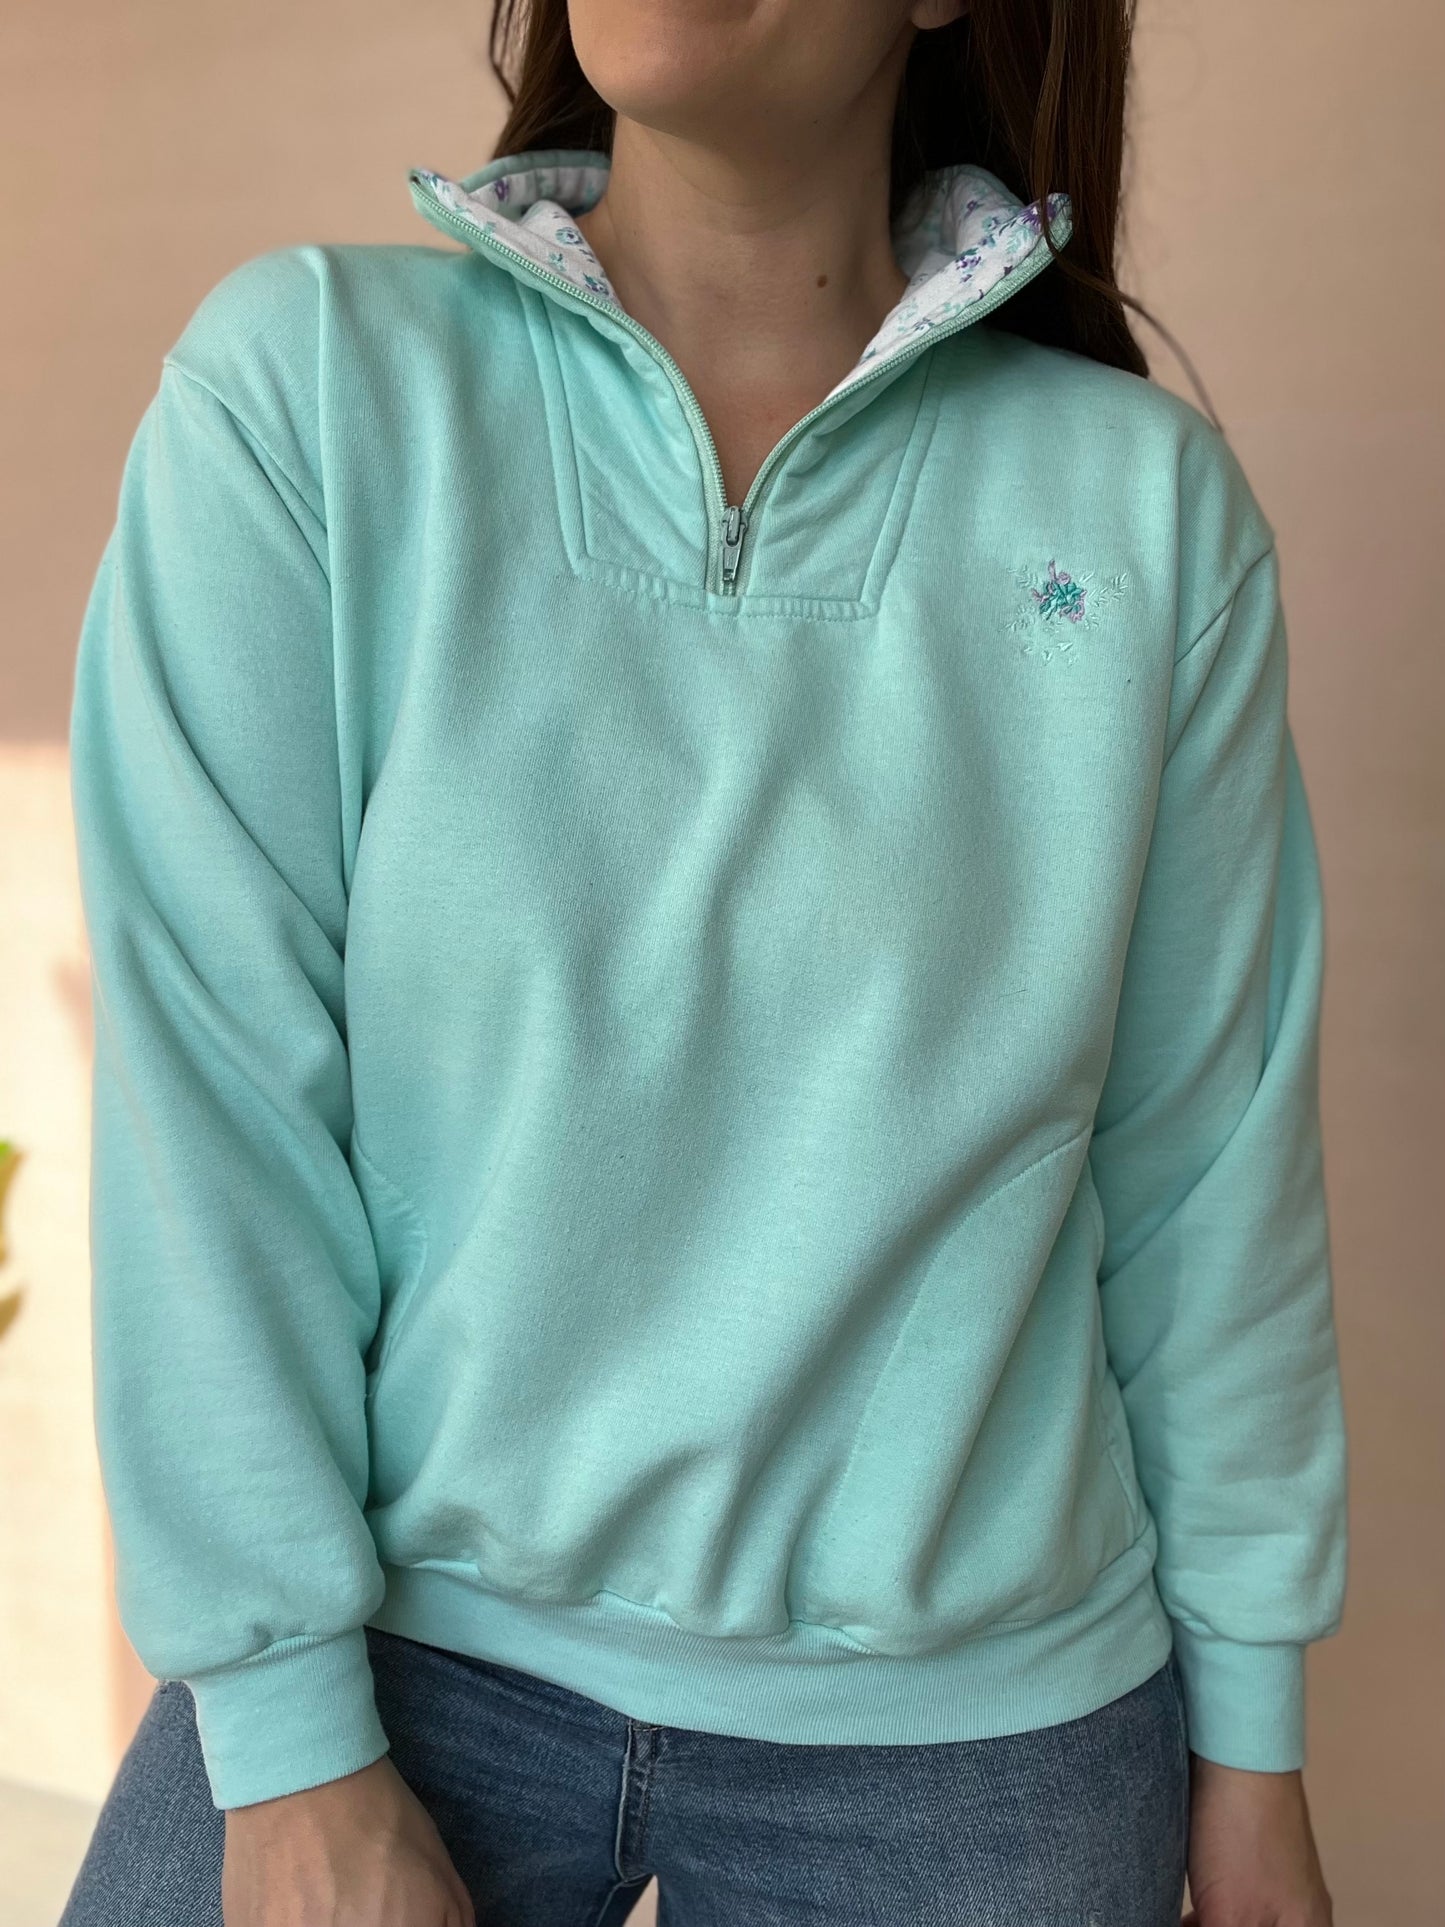 Retro Athletic Mint Sweater - Size M/L